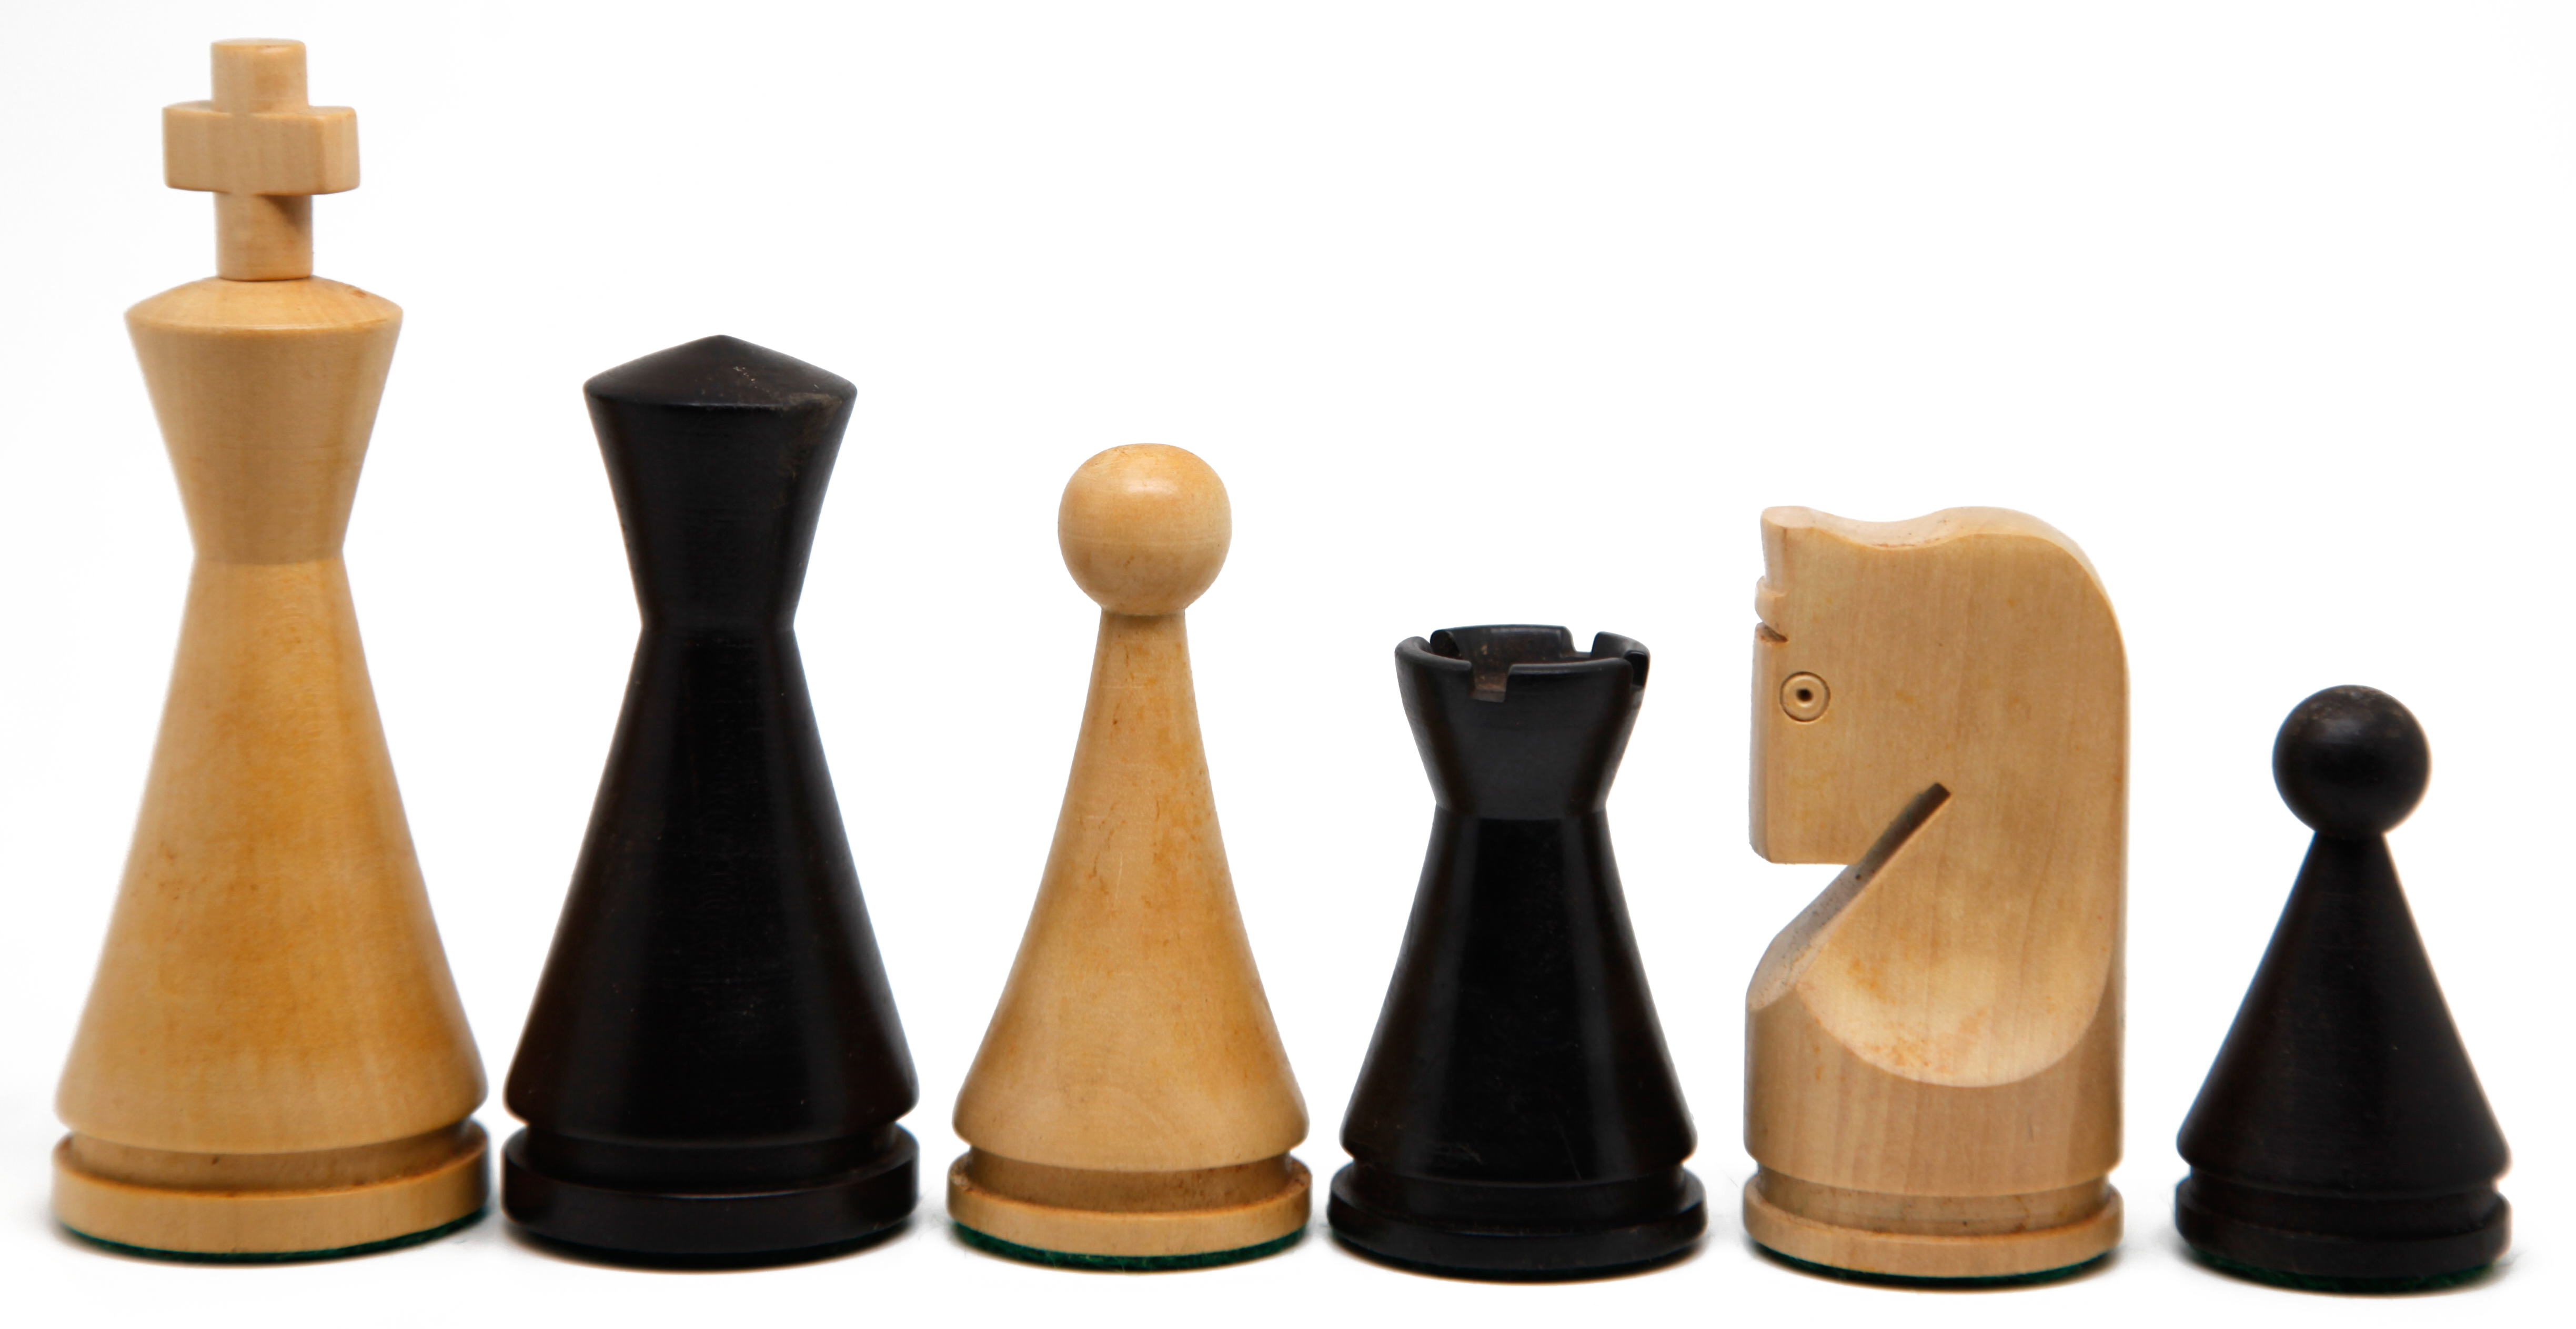 VI/ Piezas de ajedrez modelo Cone modernas "3.75" Ebanizado. 5579